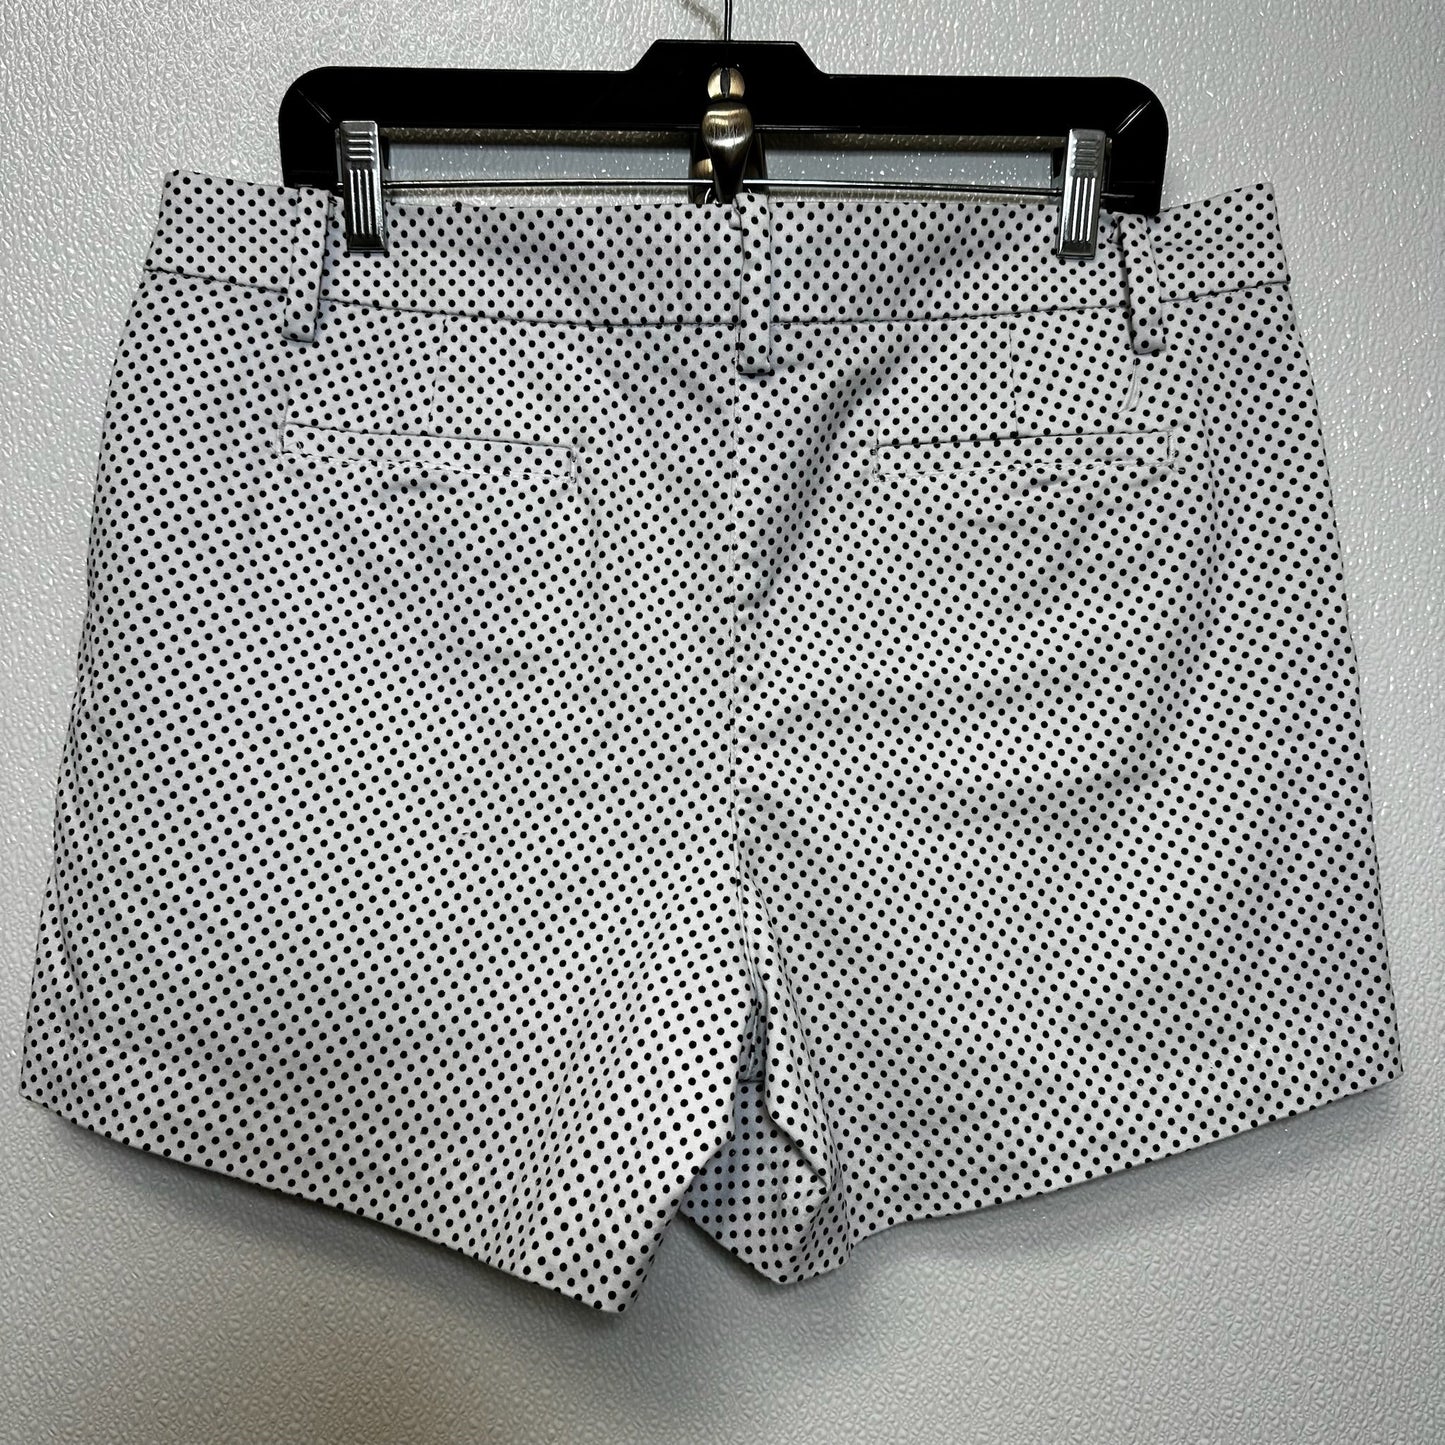 Polkadot Shorts Nautica, Size 12